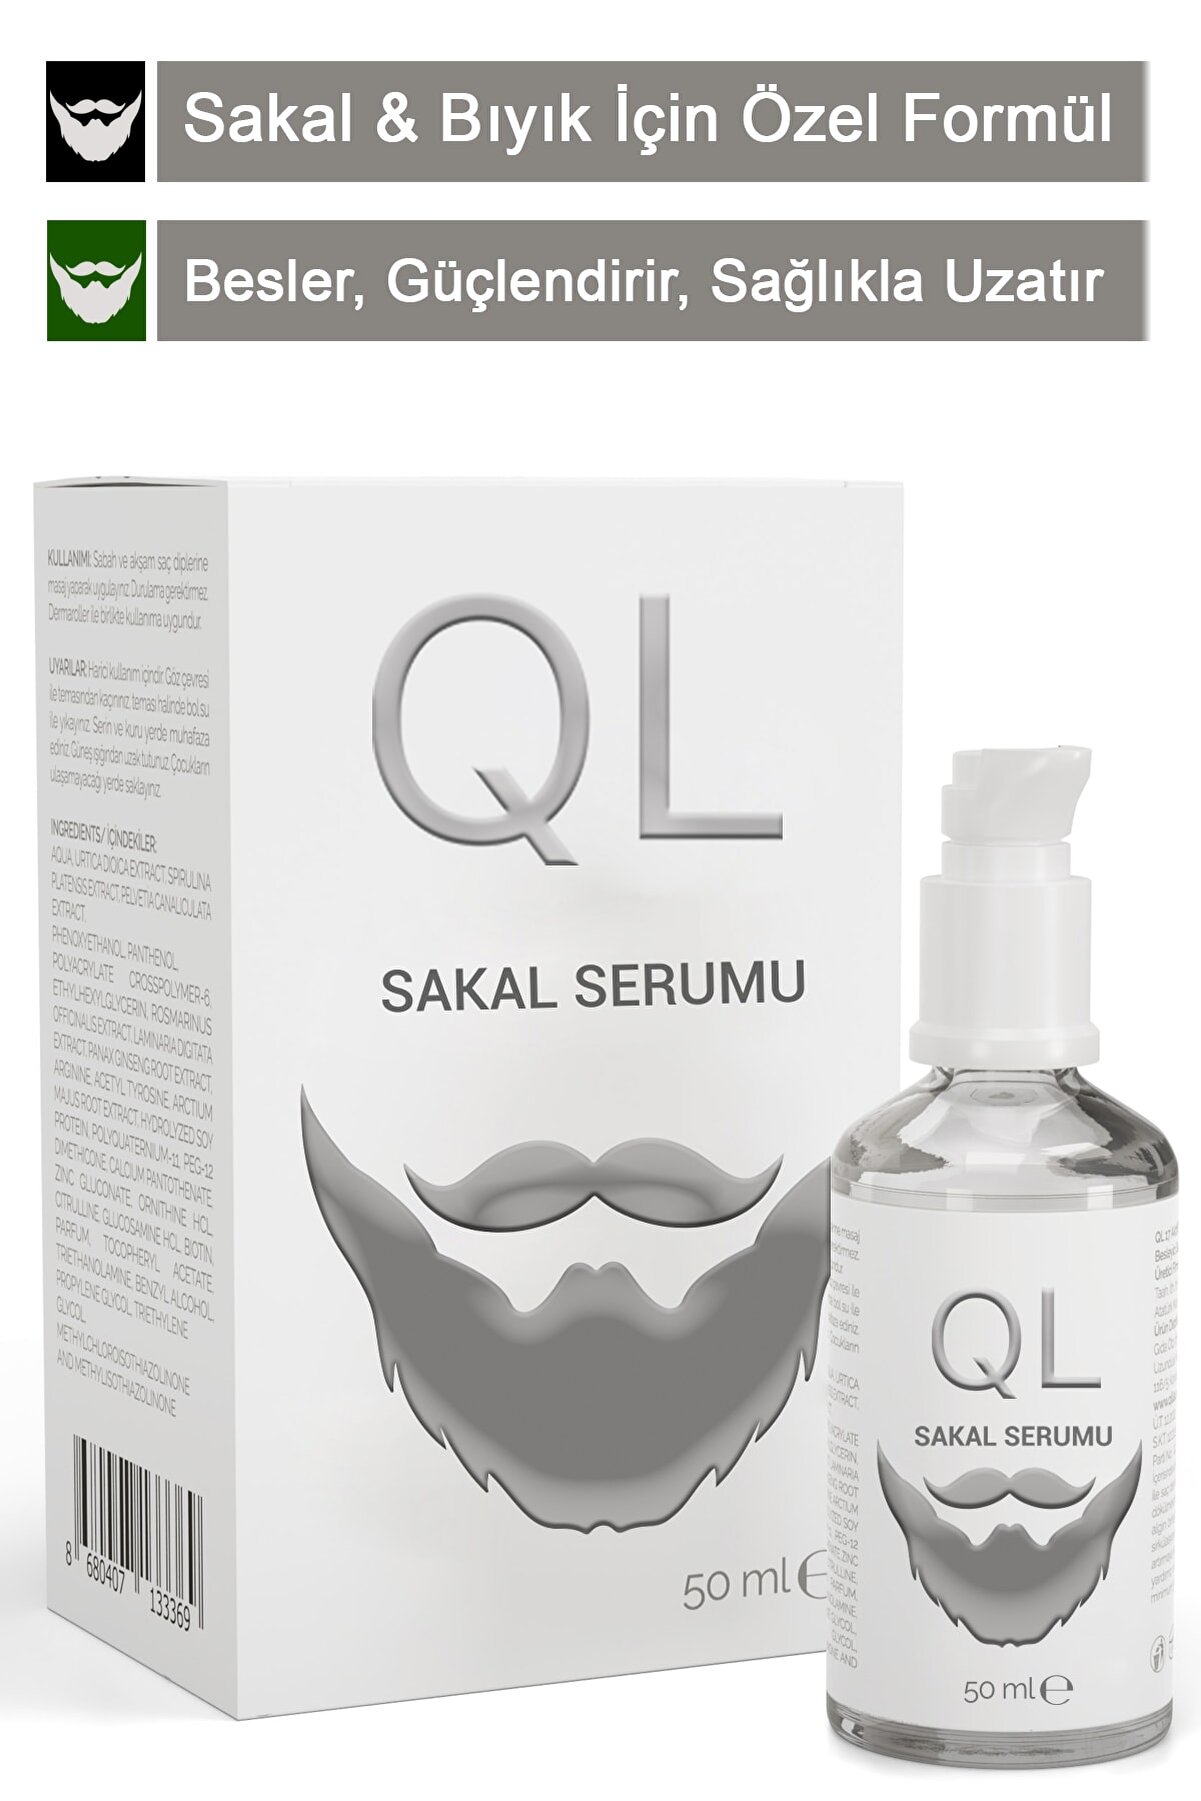 Quality Life Ql Sakal Serumu Premium Serisi